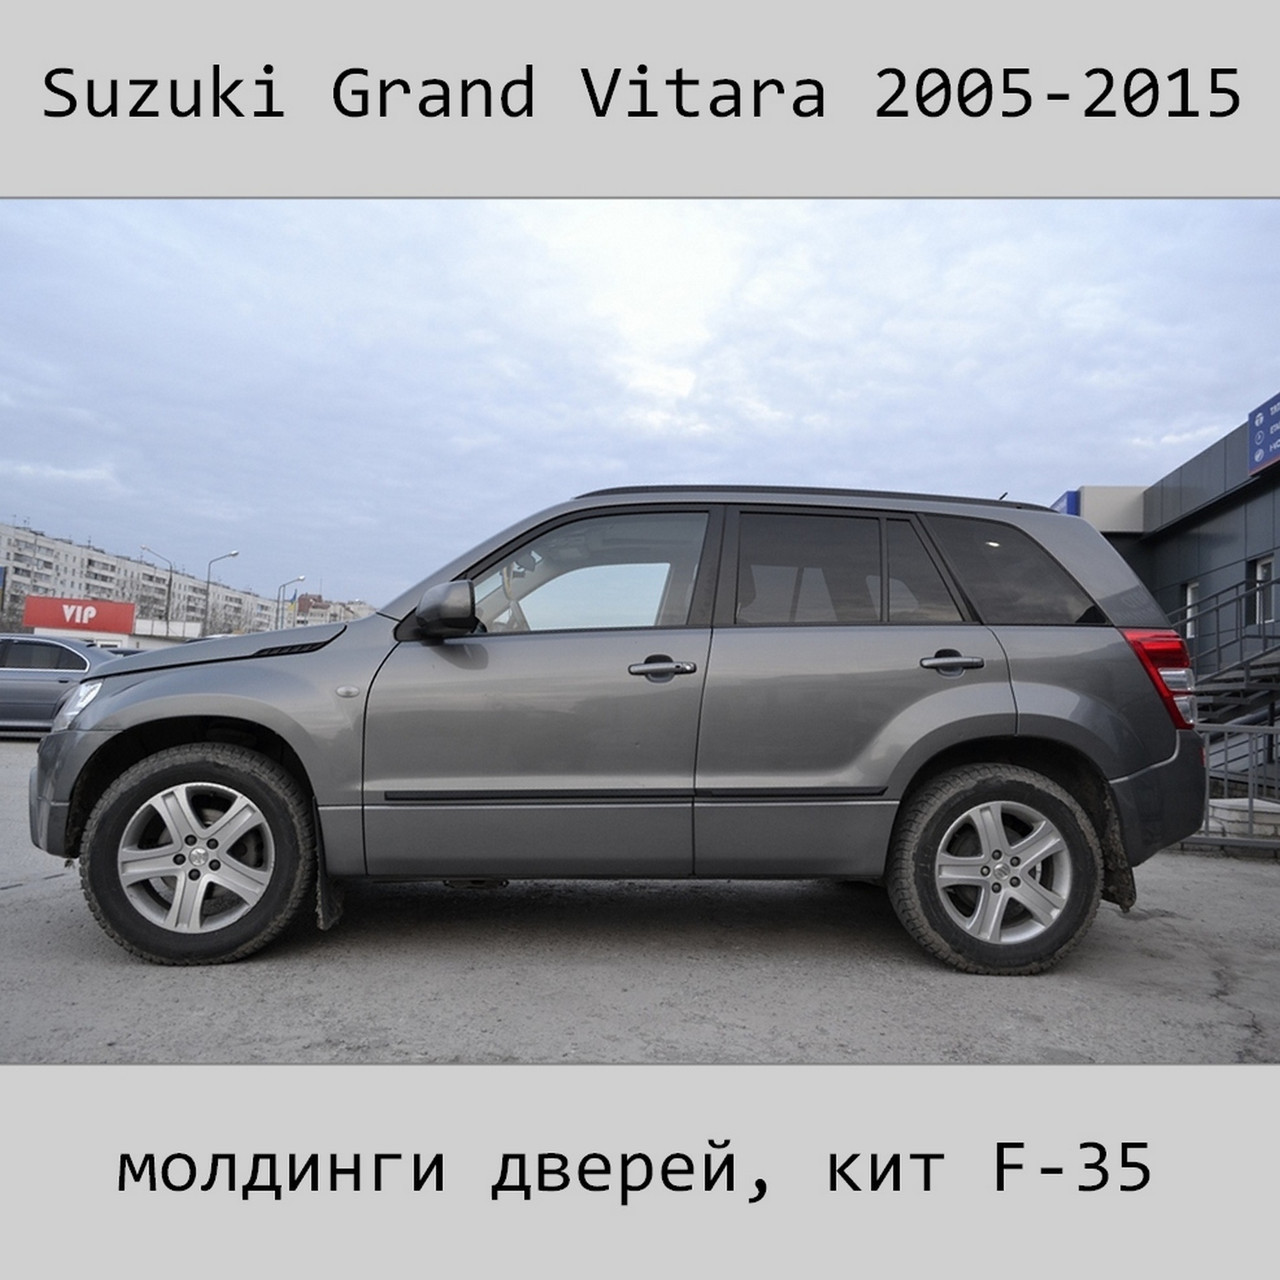 Молдинги на двері для Suzuki Grand Vitara 5Dr 2005-2015